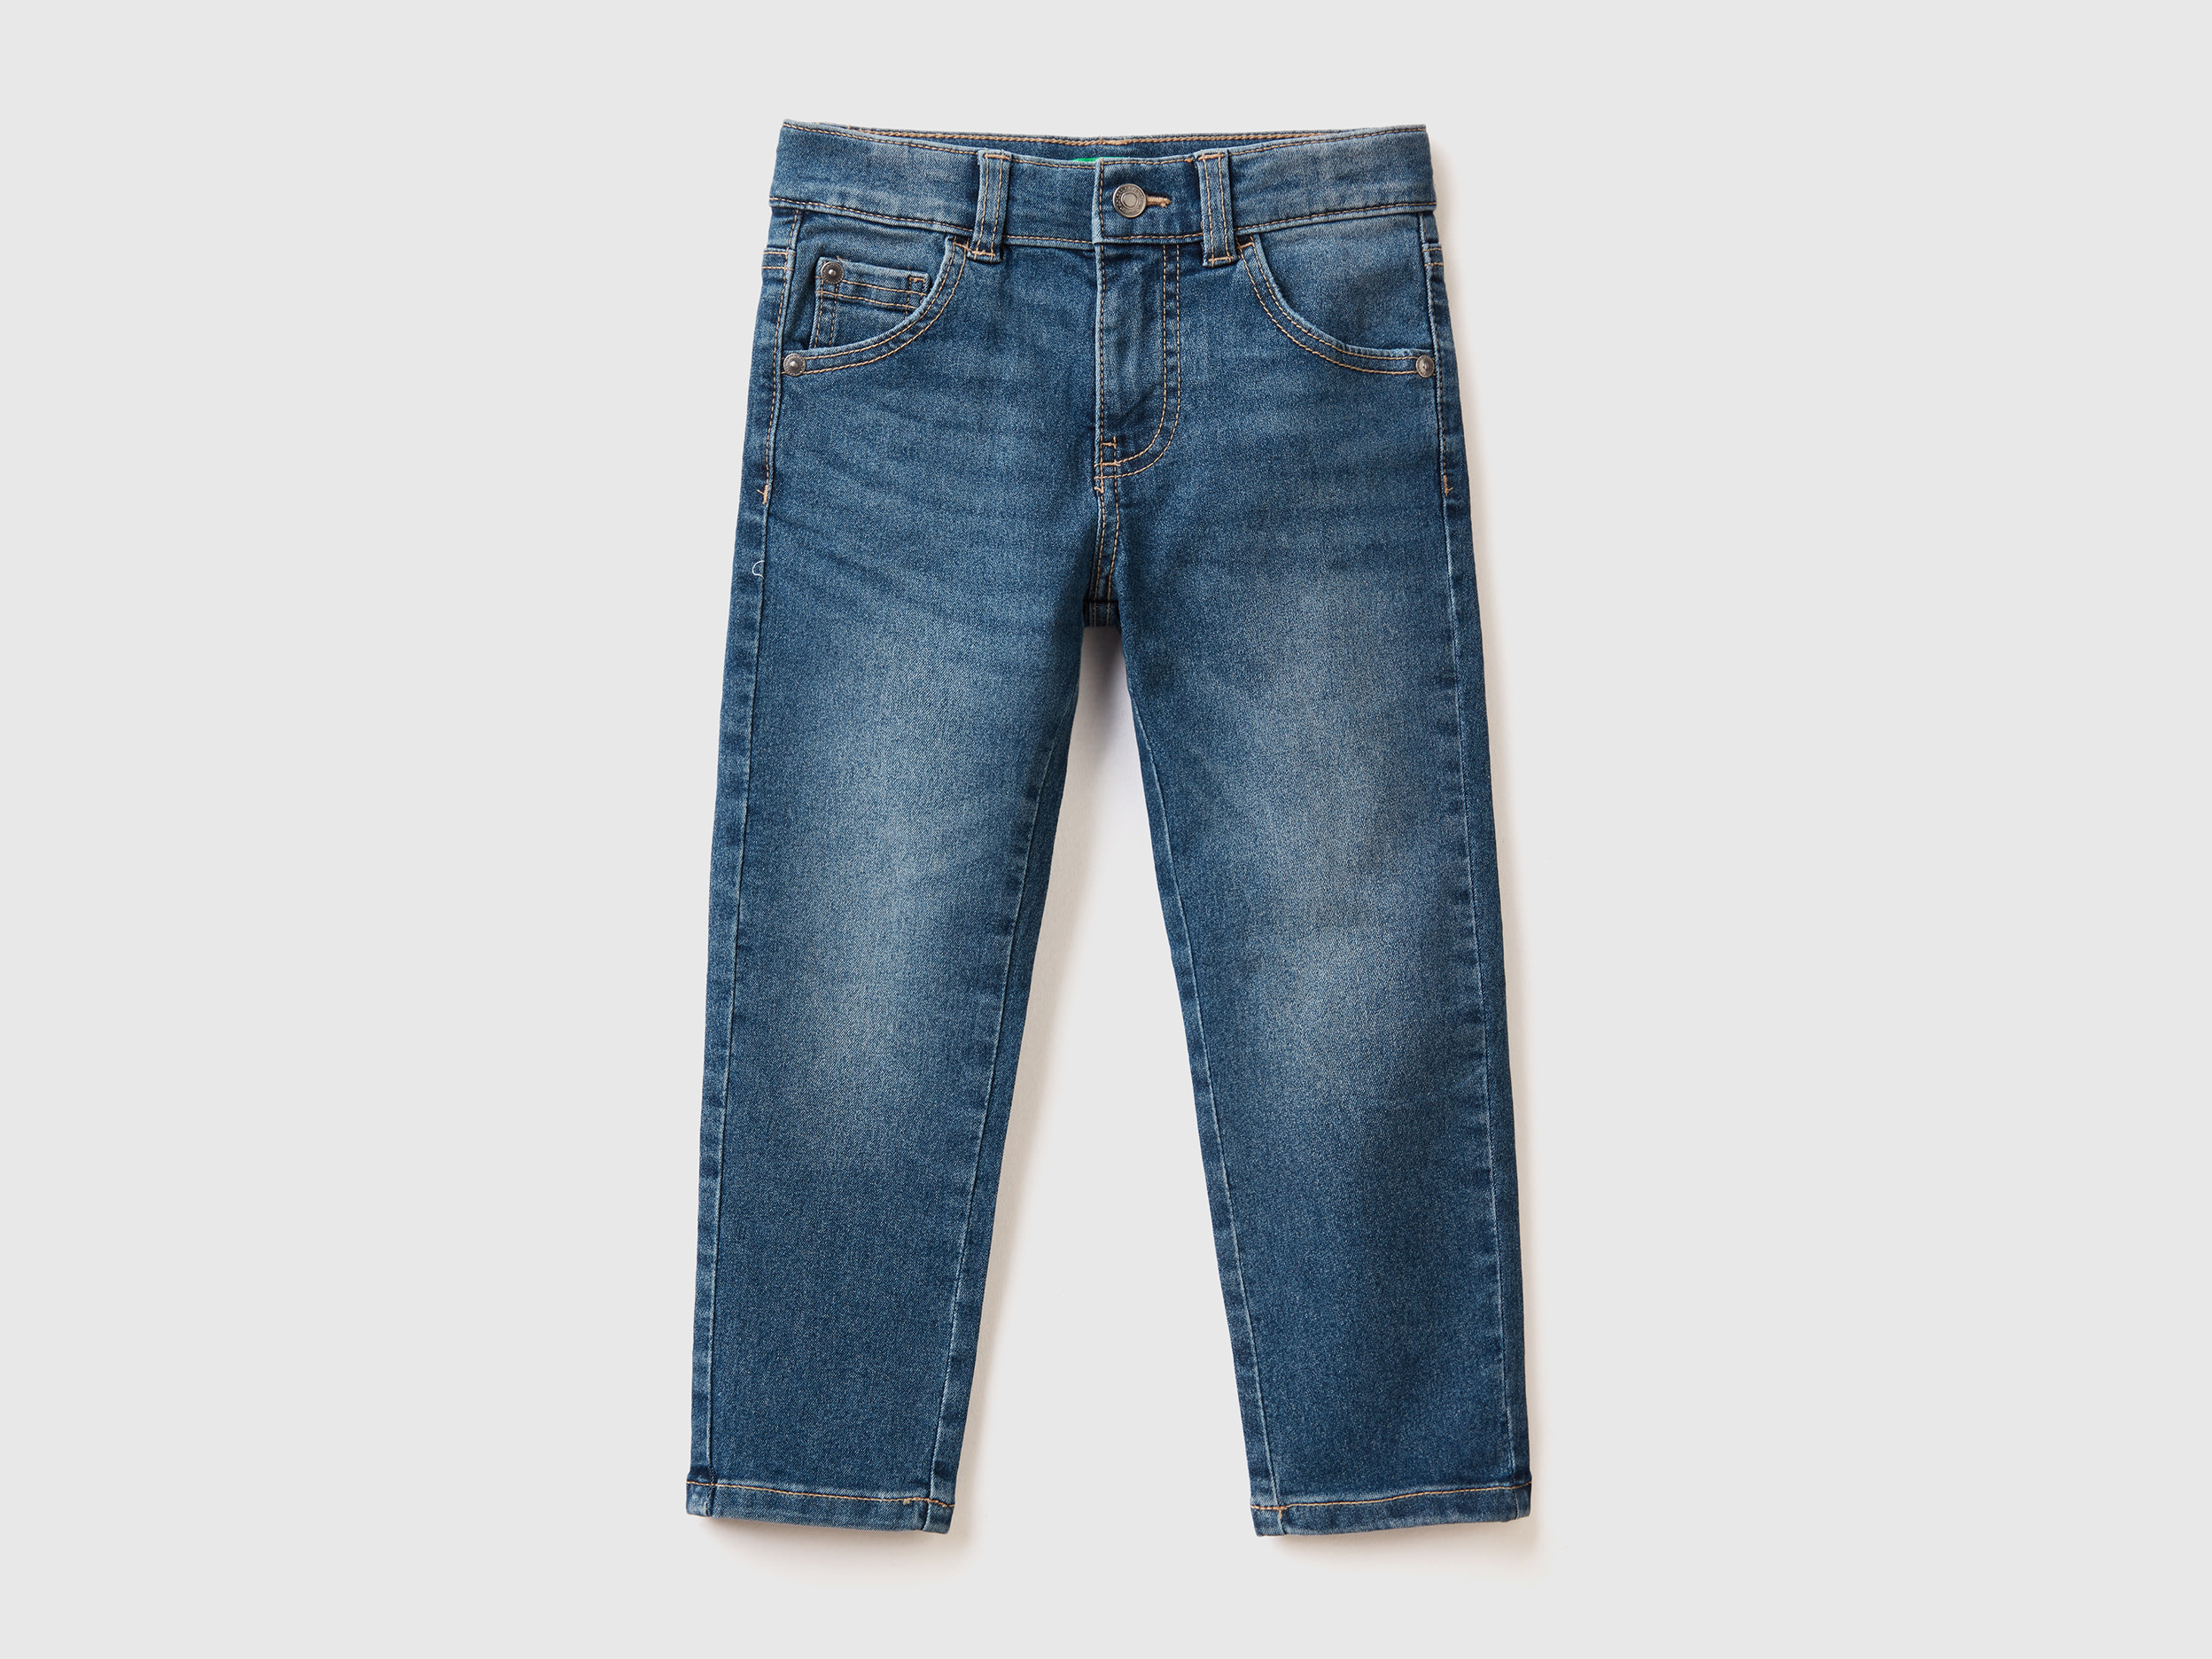 Benetton, Vintage Look Skinny Fit Jeans, size 5-6, Dark Blue, Kids